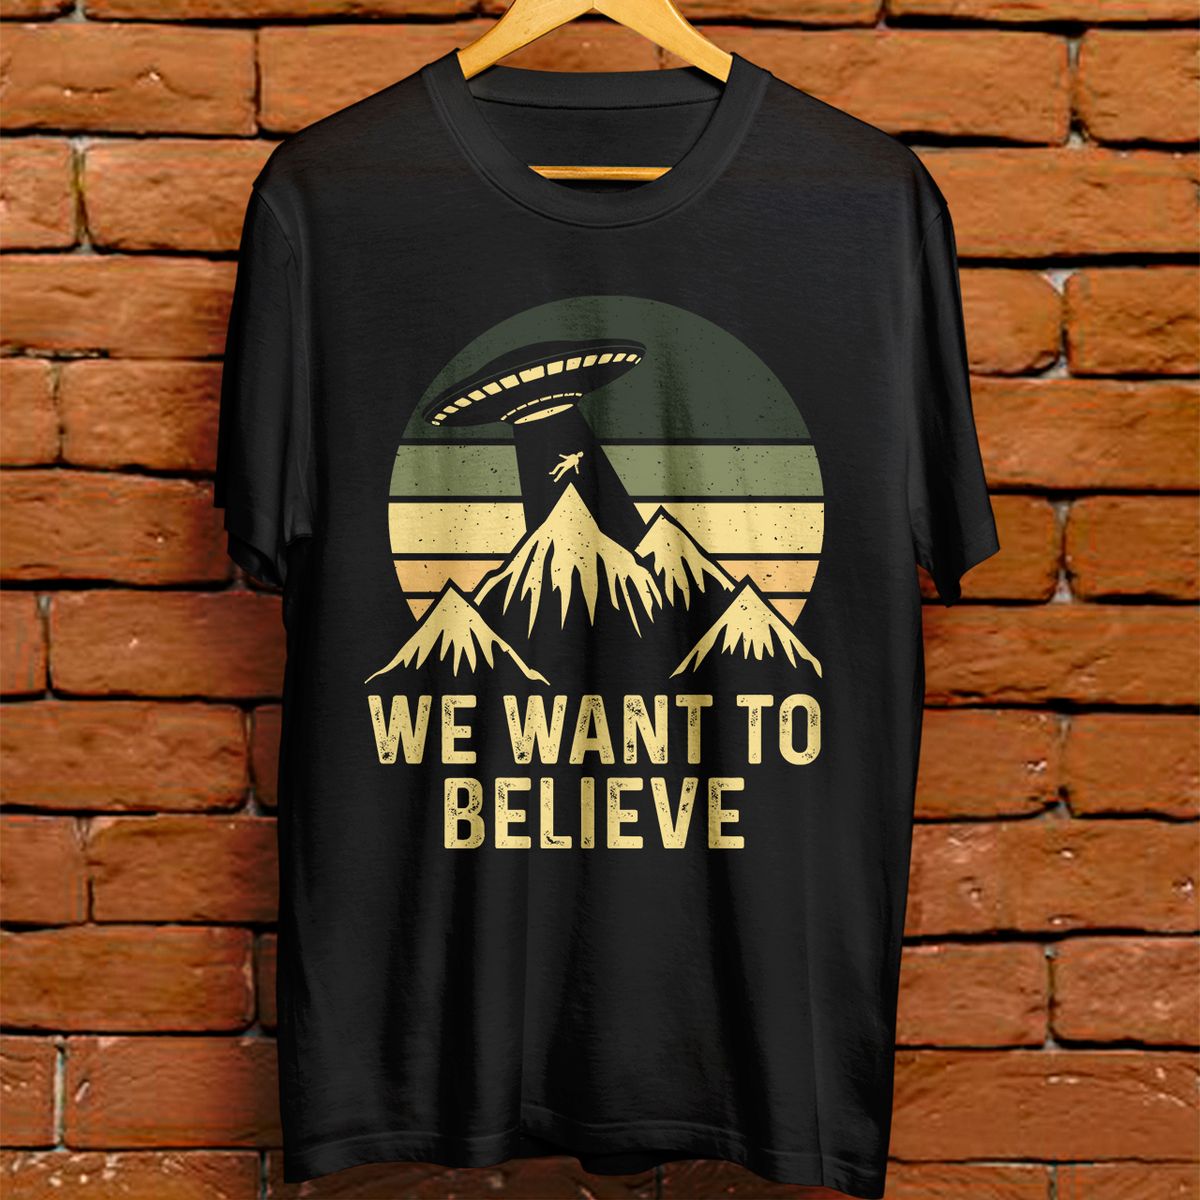 Nome do produto: Camiseta - We want to believe